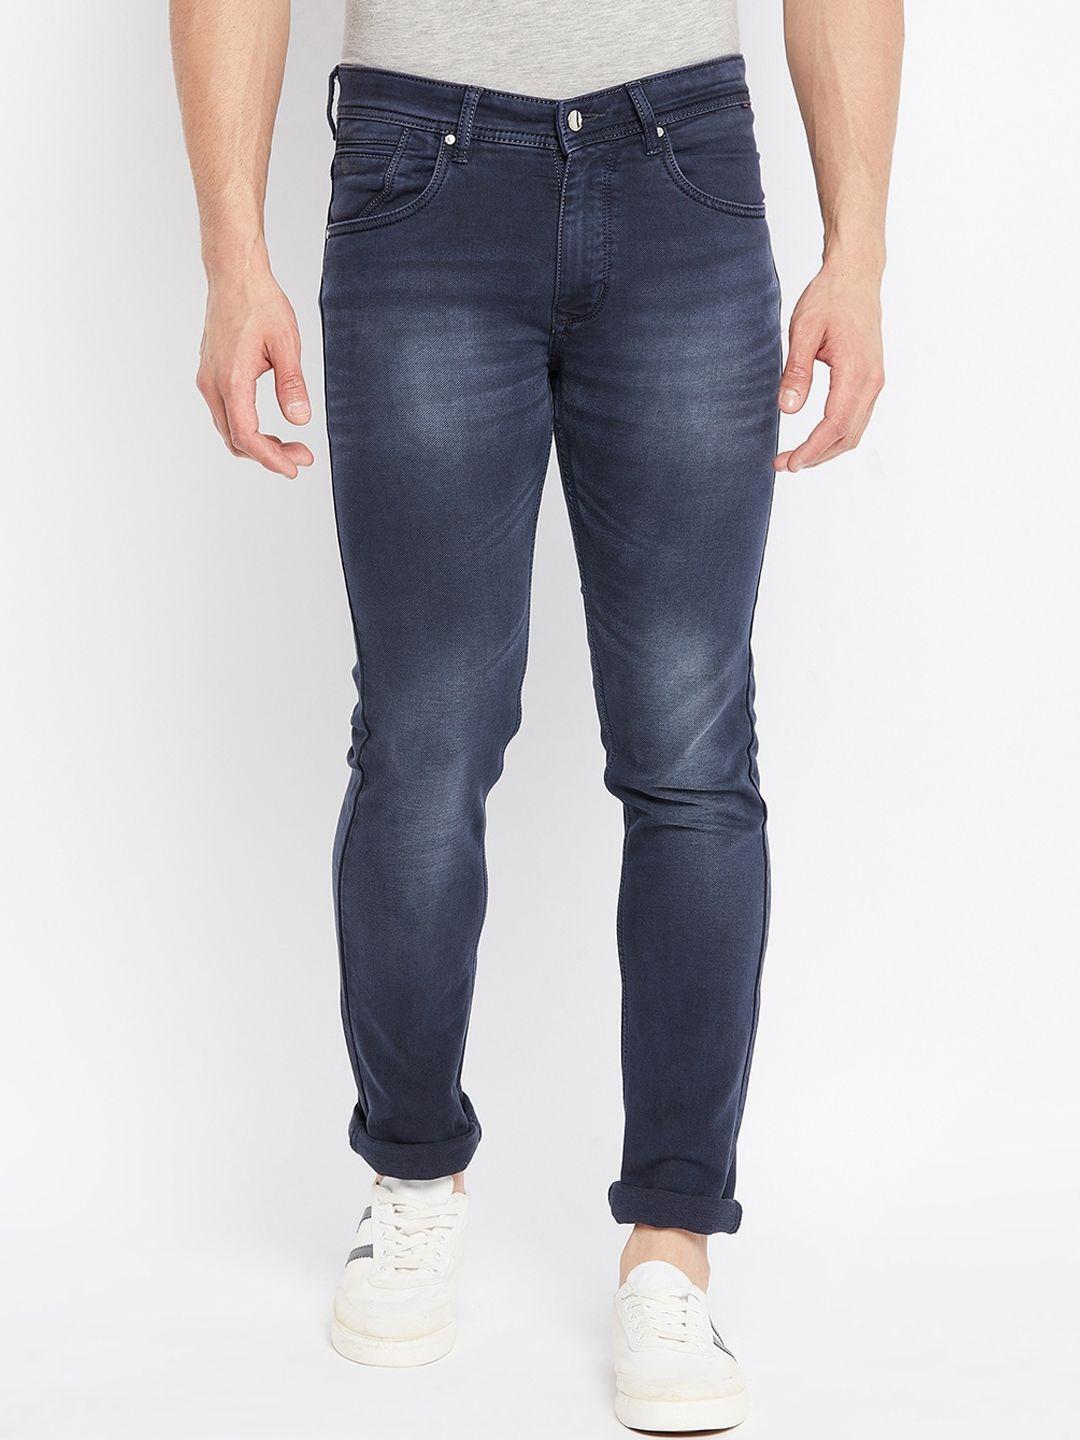 duke-men-grey-slim-fit-light-fade-stretchable-jeans